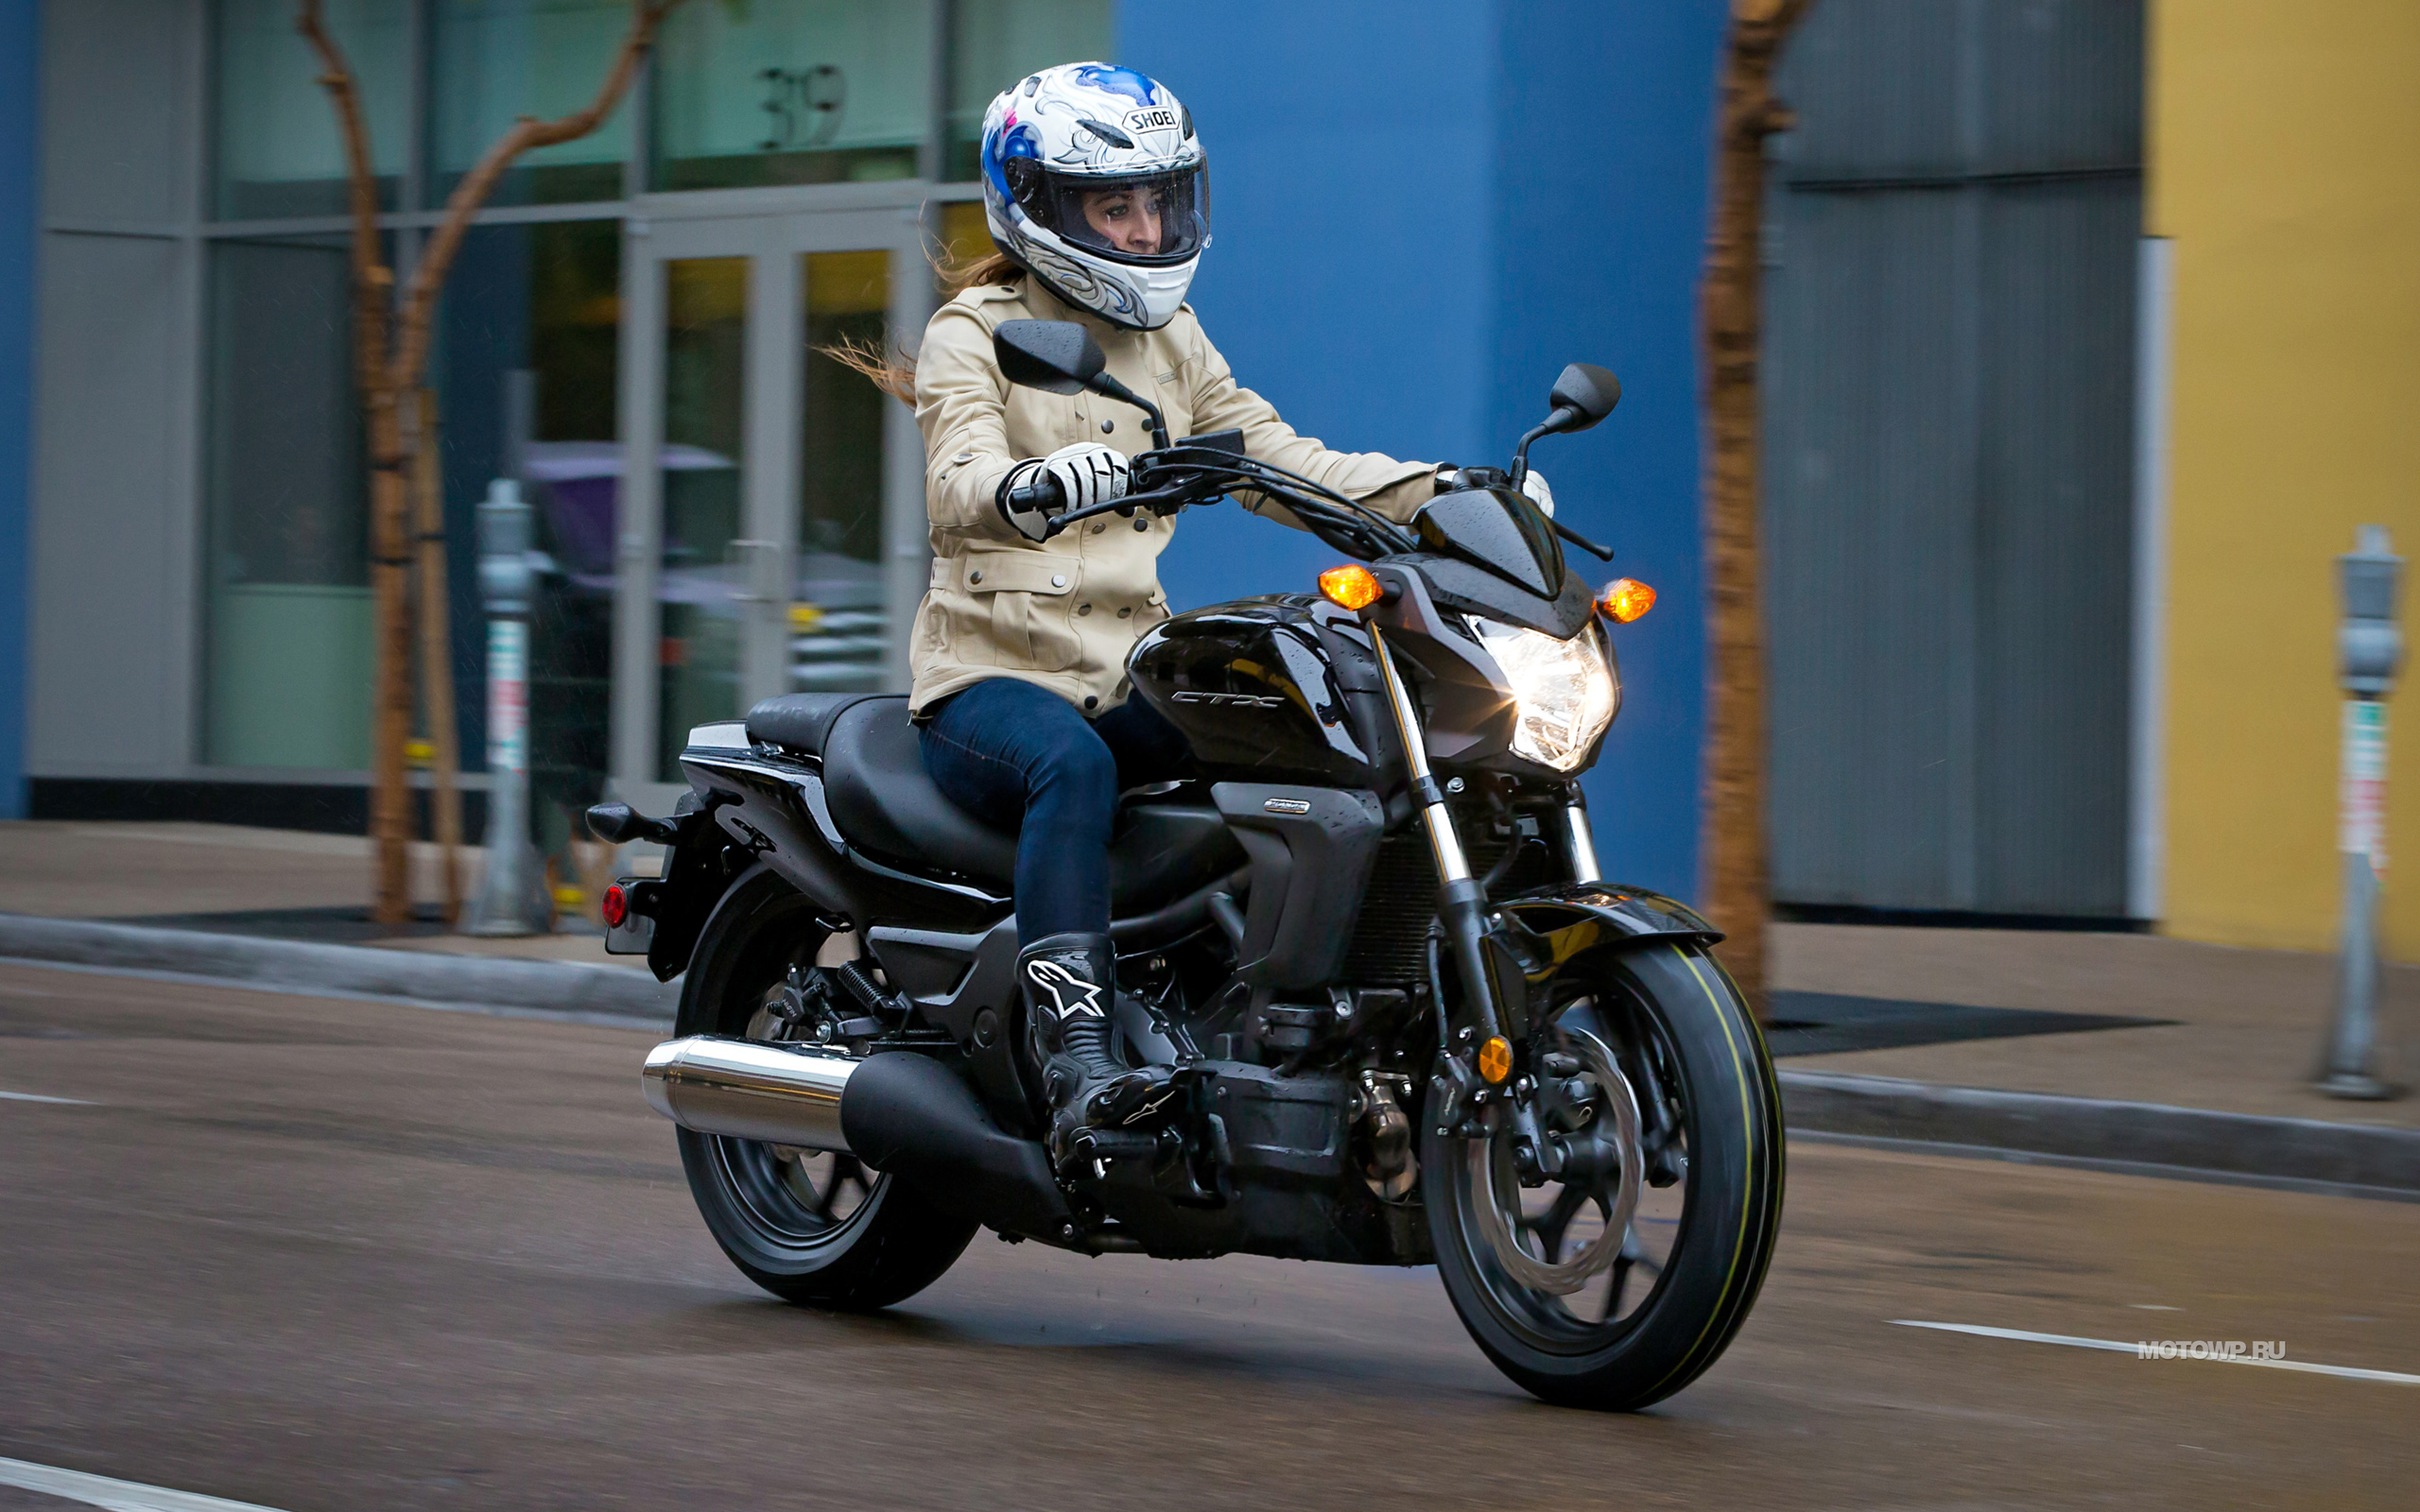 Мотоцикл honda ctx700 - туристический круизер | ⚡chtocar